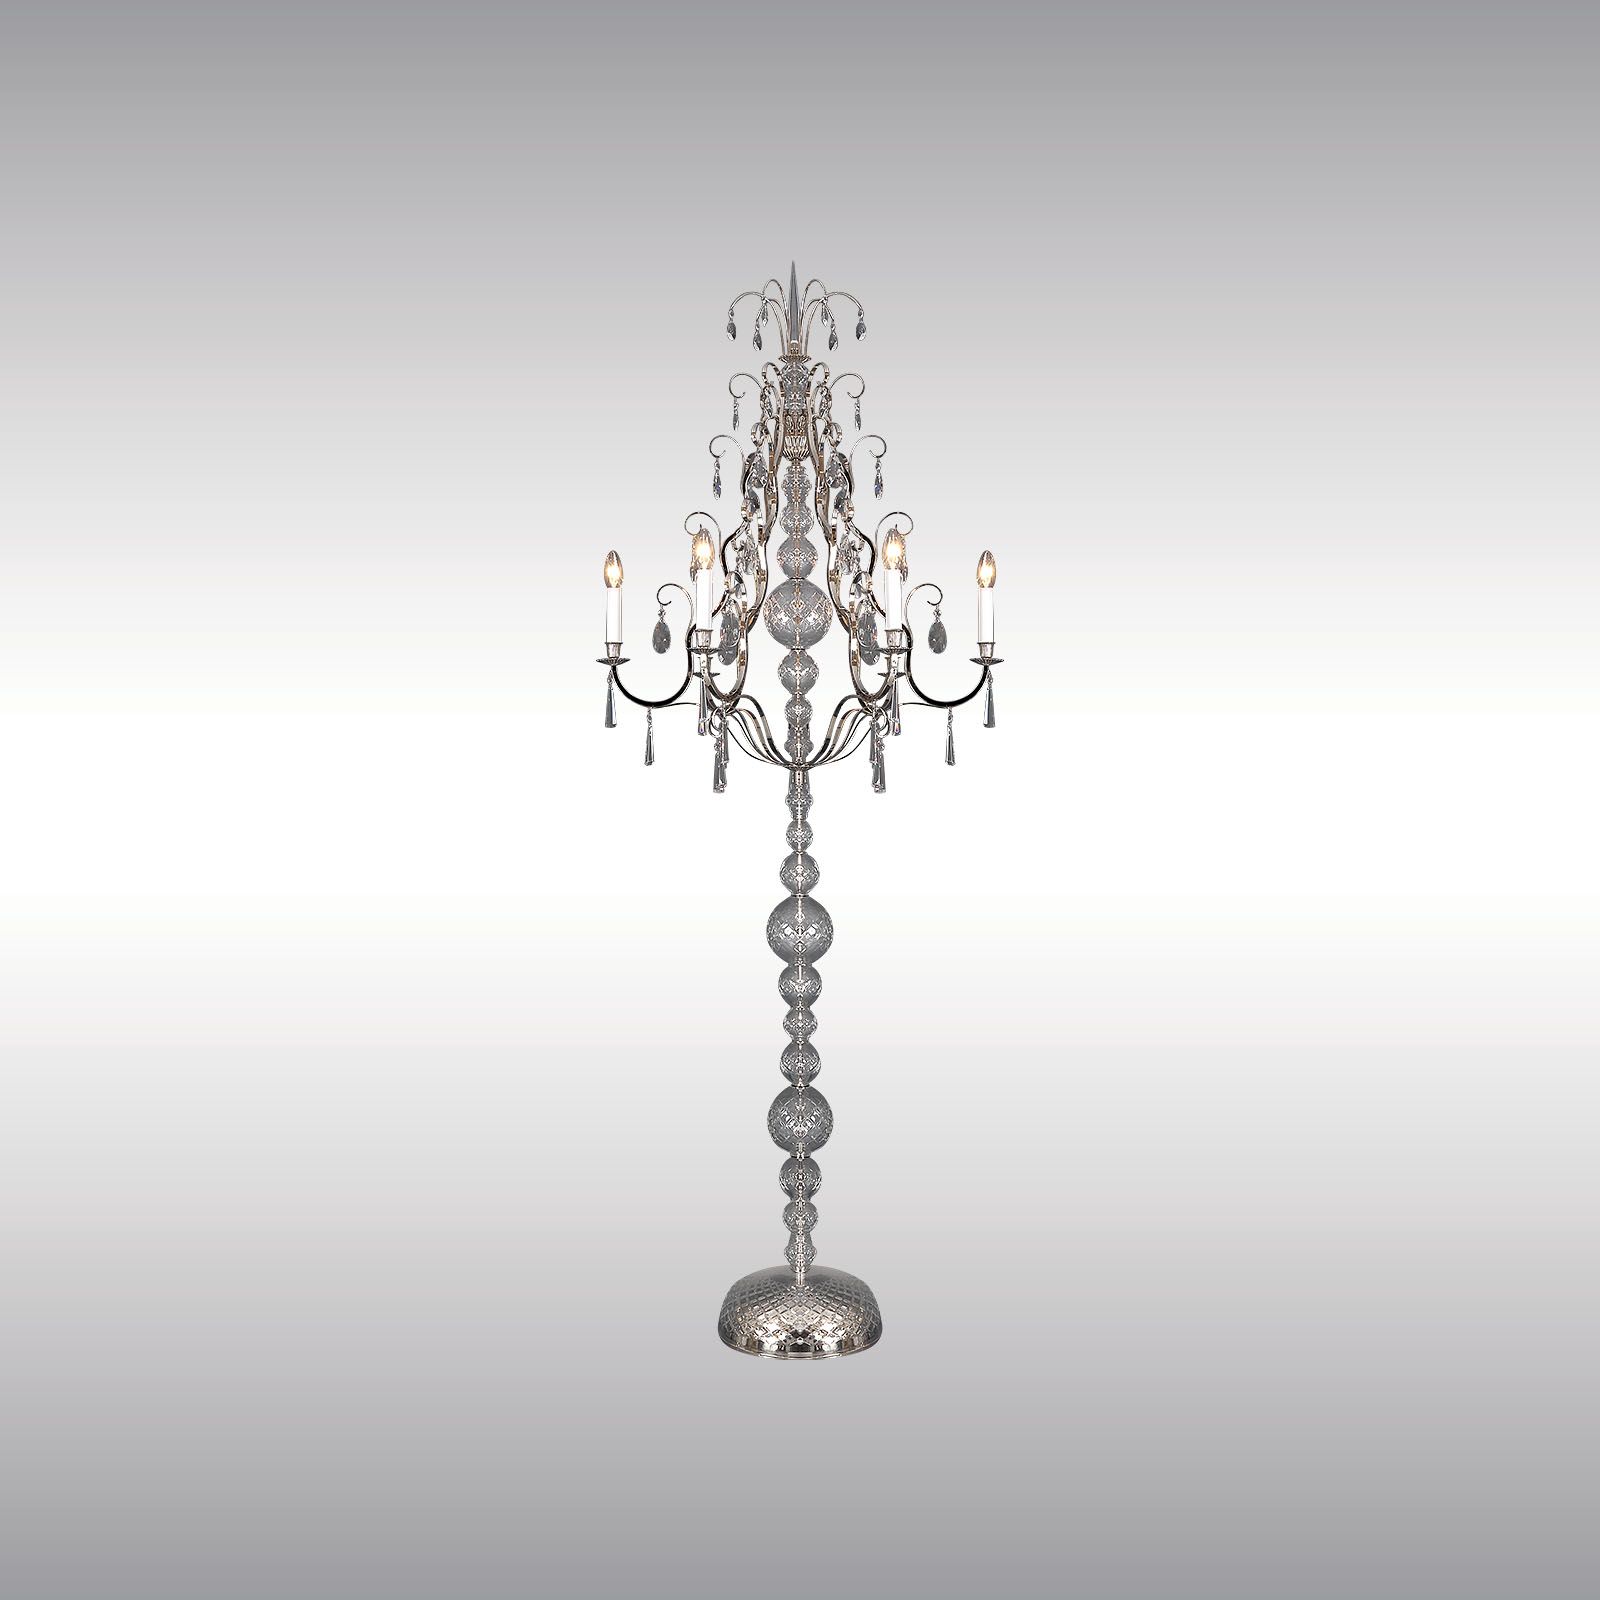 WOKA LAMPS VIENNA - OrderNr.: 20801|Magnificent Art Deco Floor Lamp - Design: WOKA 1920-30